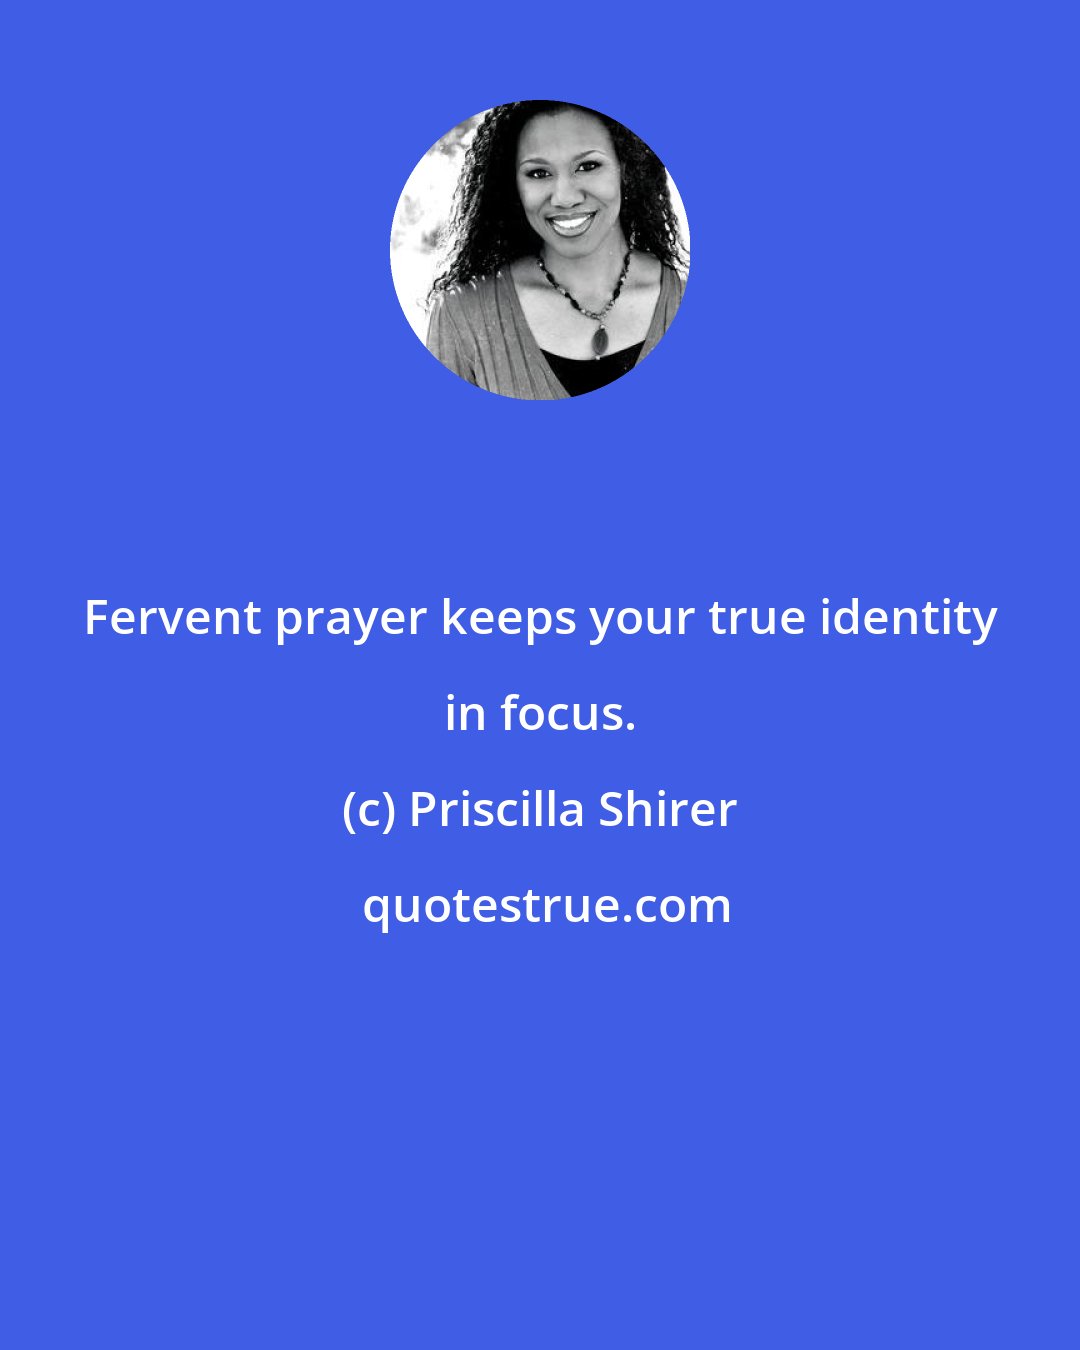 Priscilla Shirer: Fervent prayer keeps your true identity in focus.